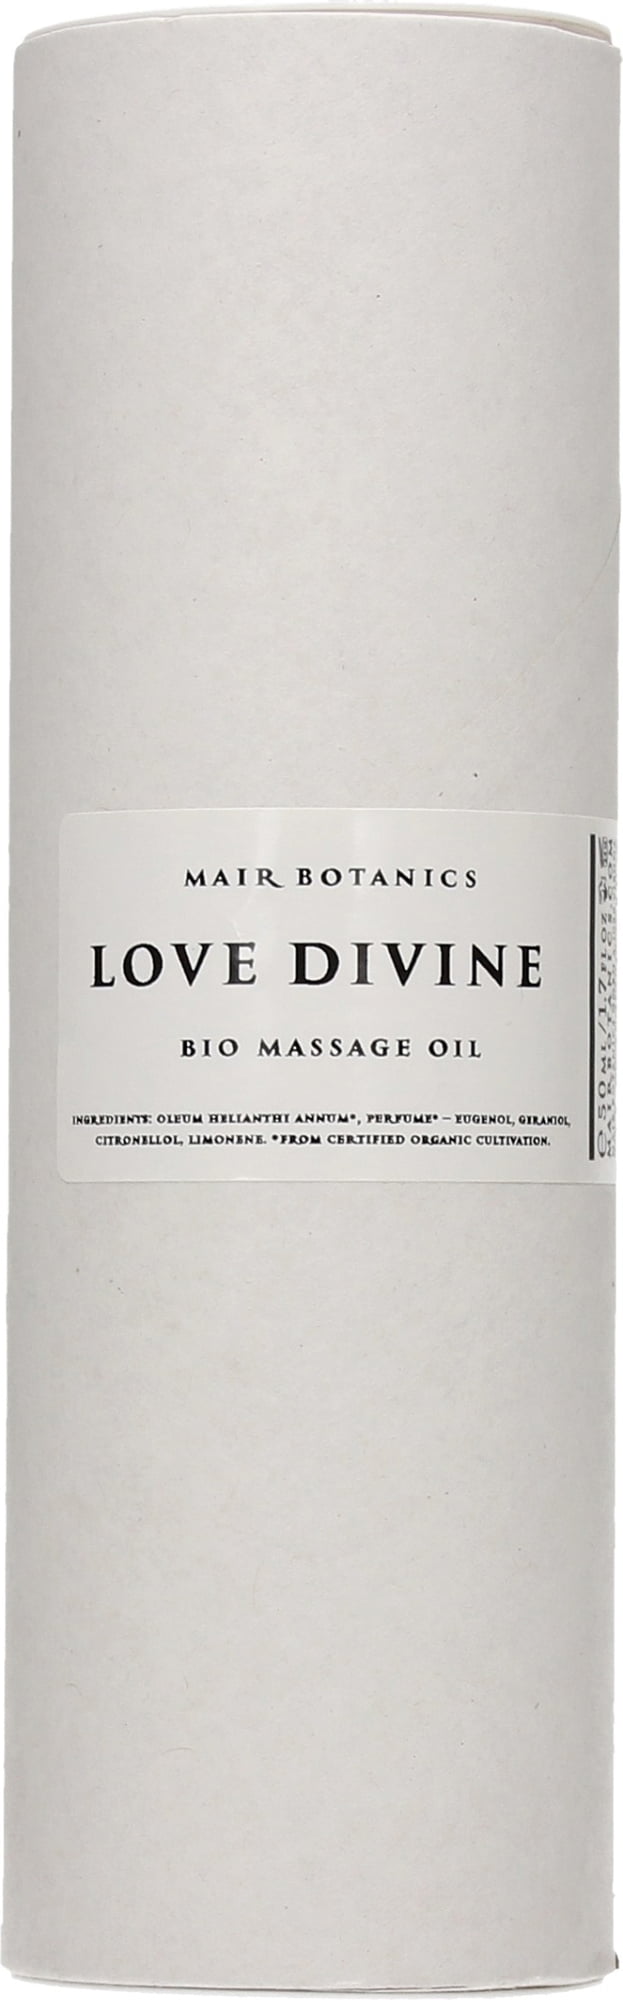 Mair Botanics Massage Oil - Love Divine